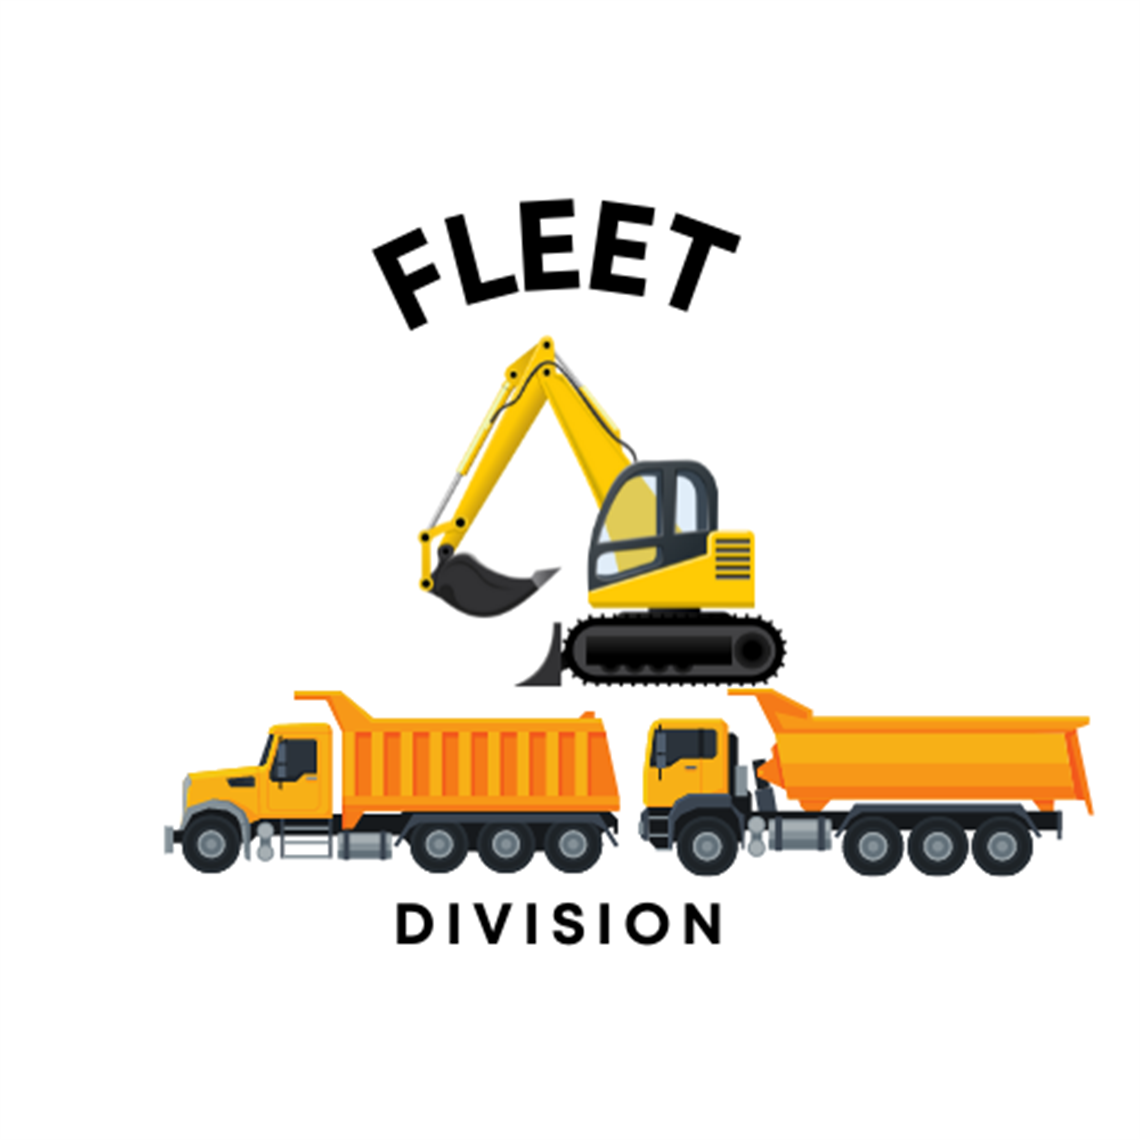 Fleet Division logo.png